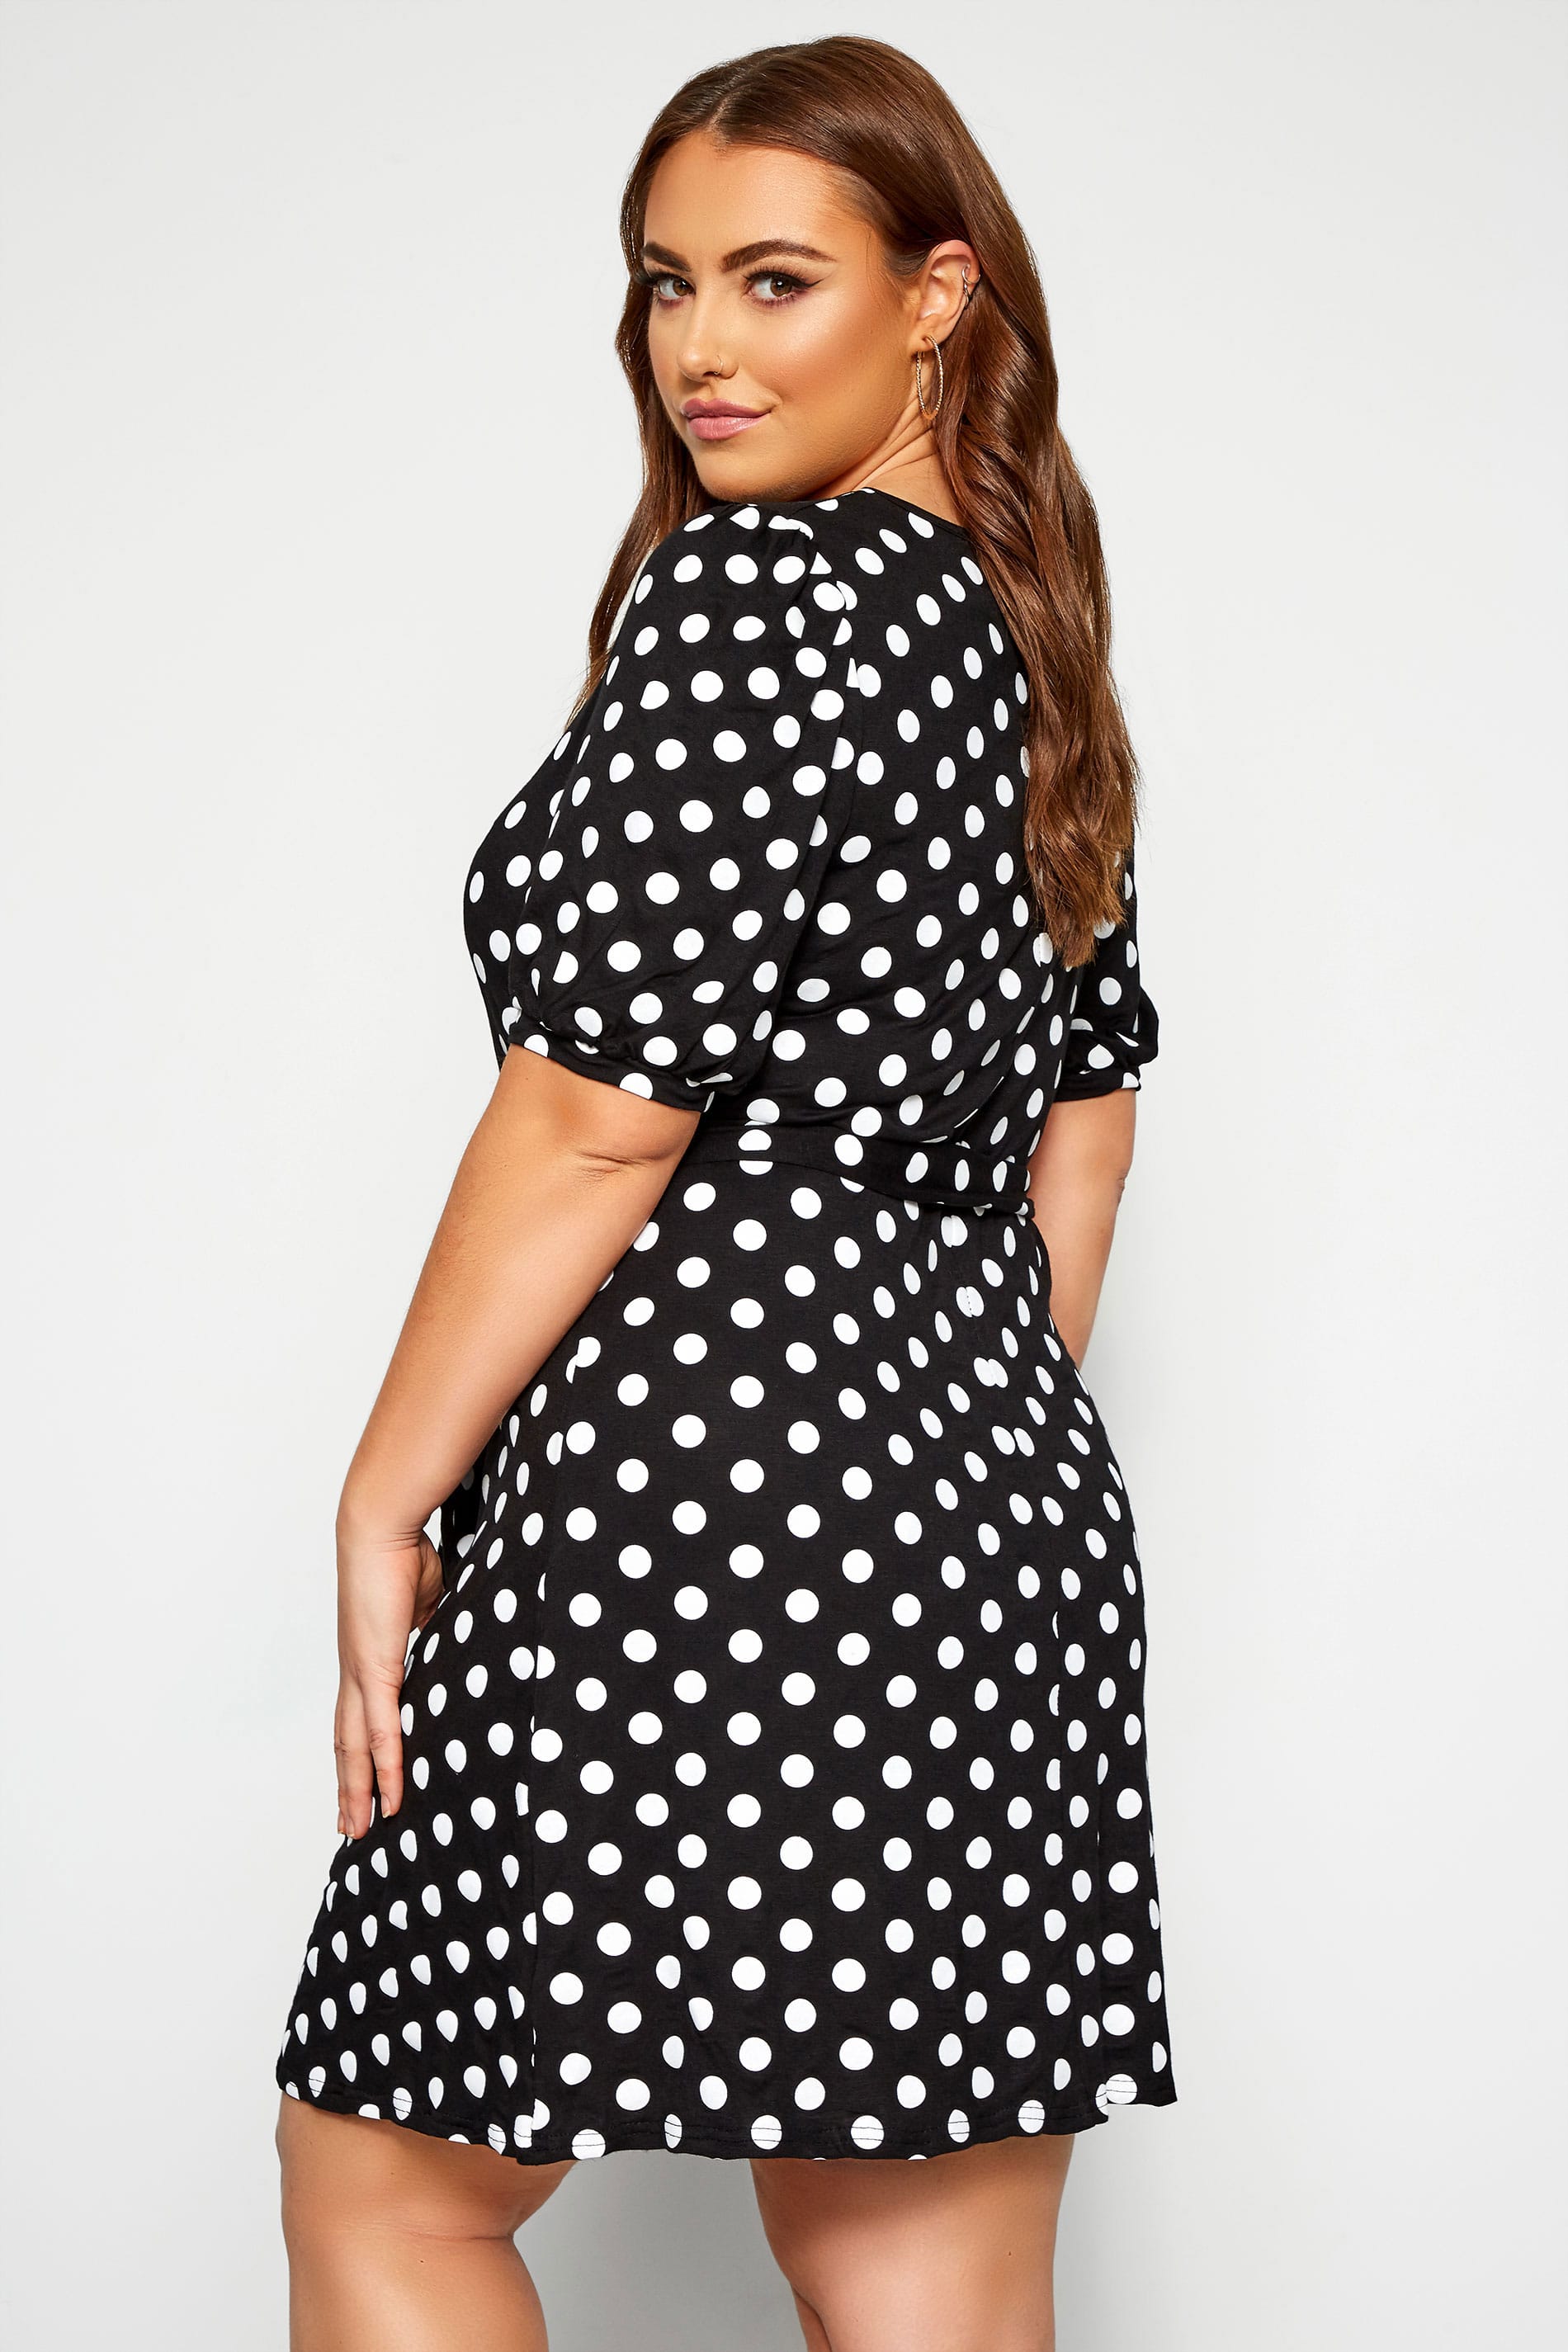 Black & White Polka Dot Swing Dress | Yours Clothing